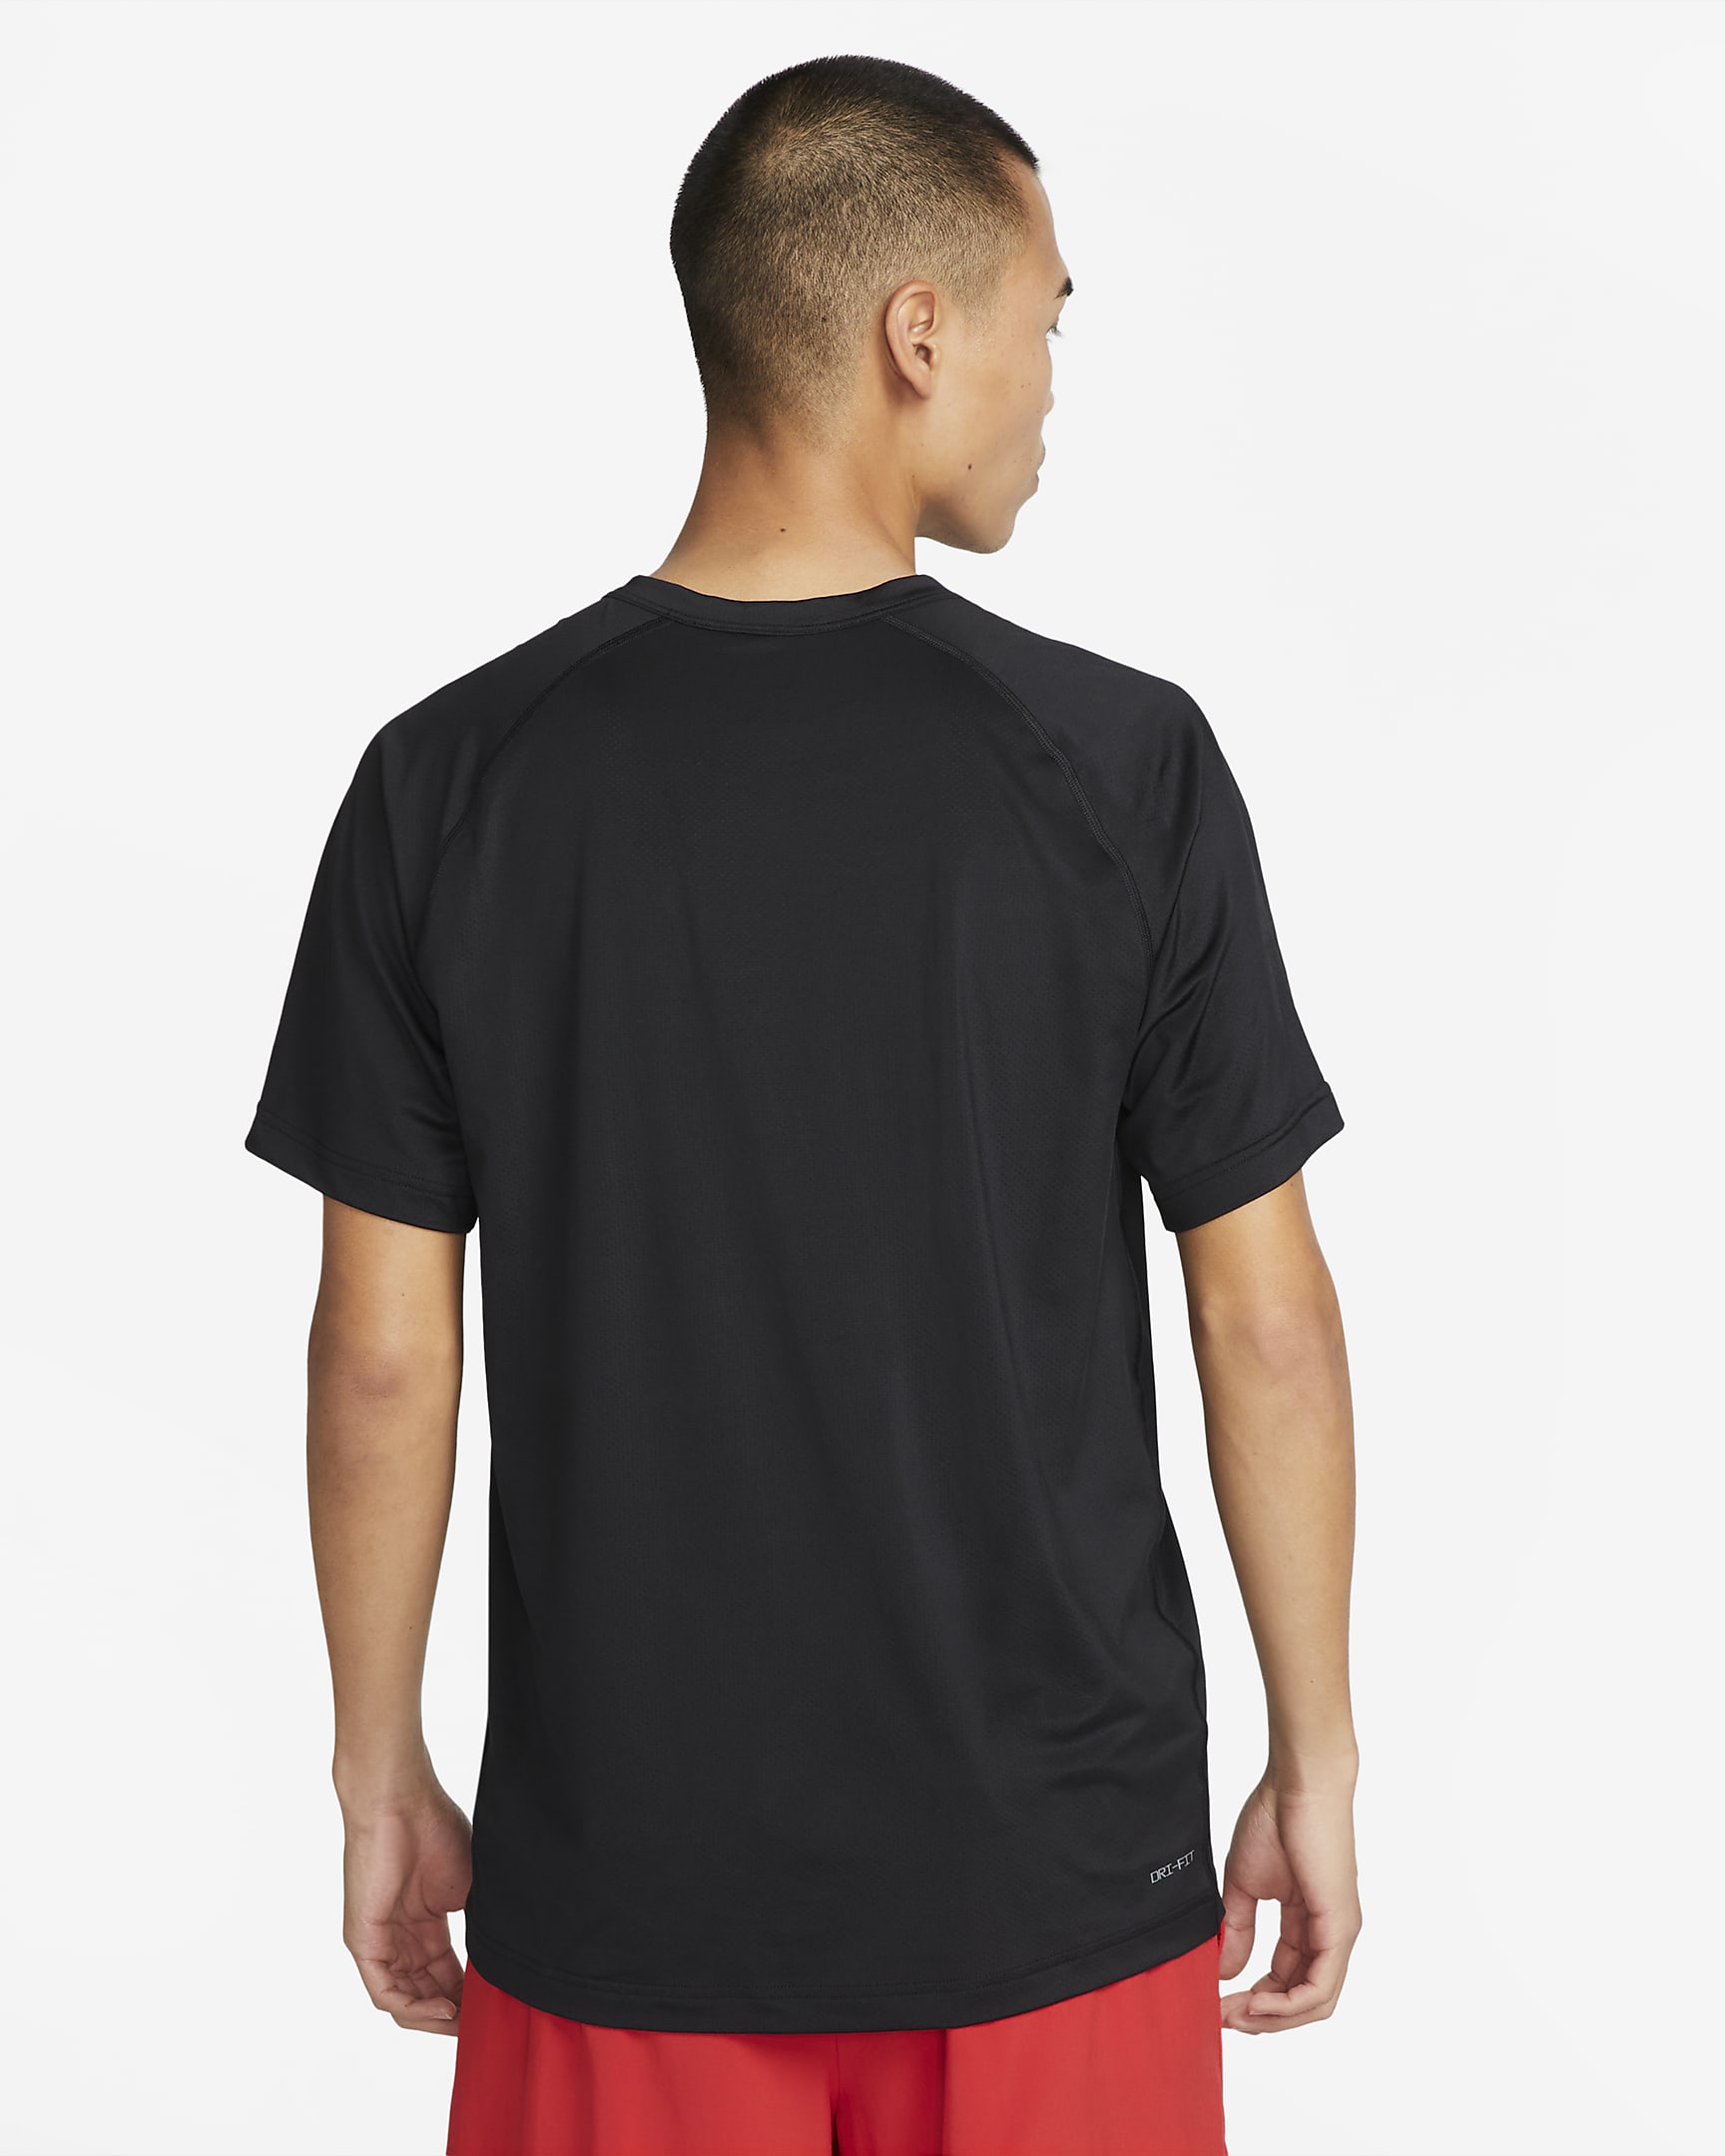 Nike Dri-FIT Ready Men's Short-Sleeve Fitness Top. Nike ID